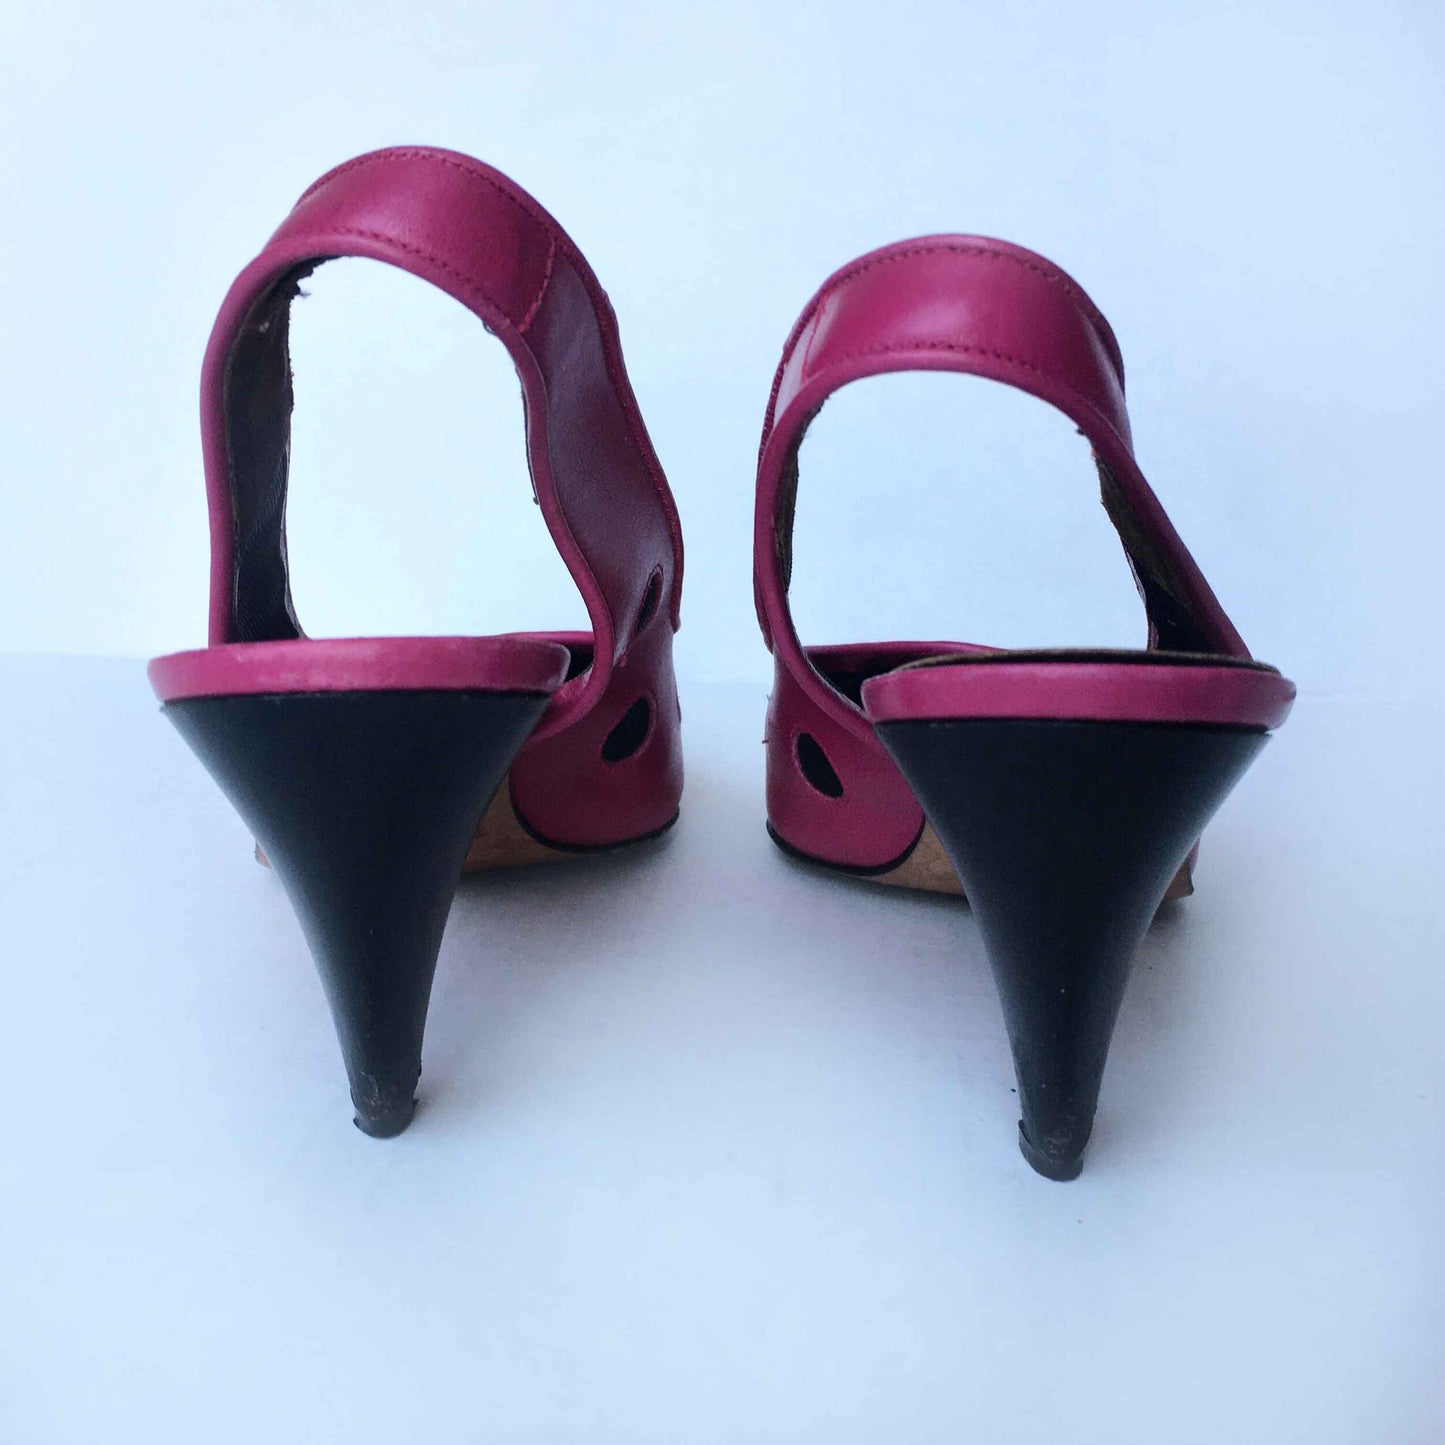 bally mesh polka dot slingback heel - size 8.5